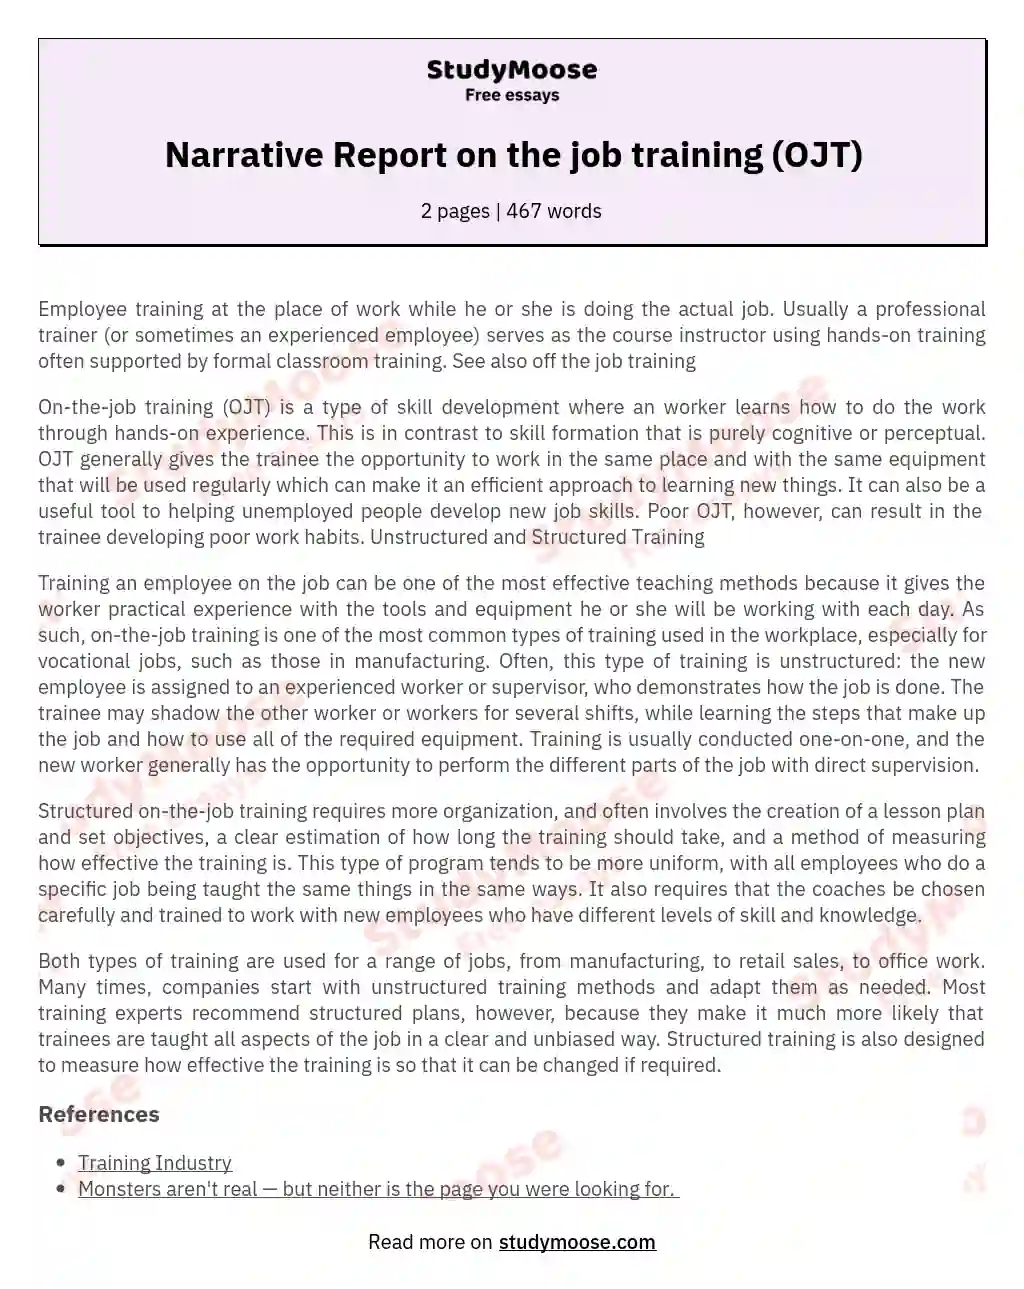 Narrative Report on the job training (OJT) essay